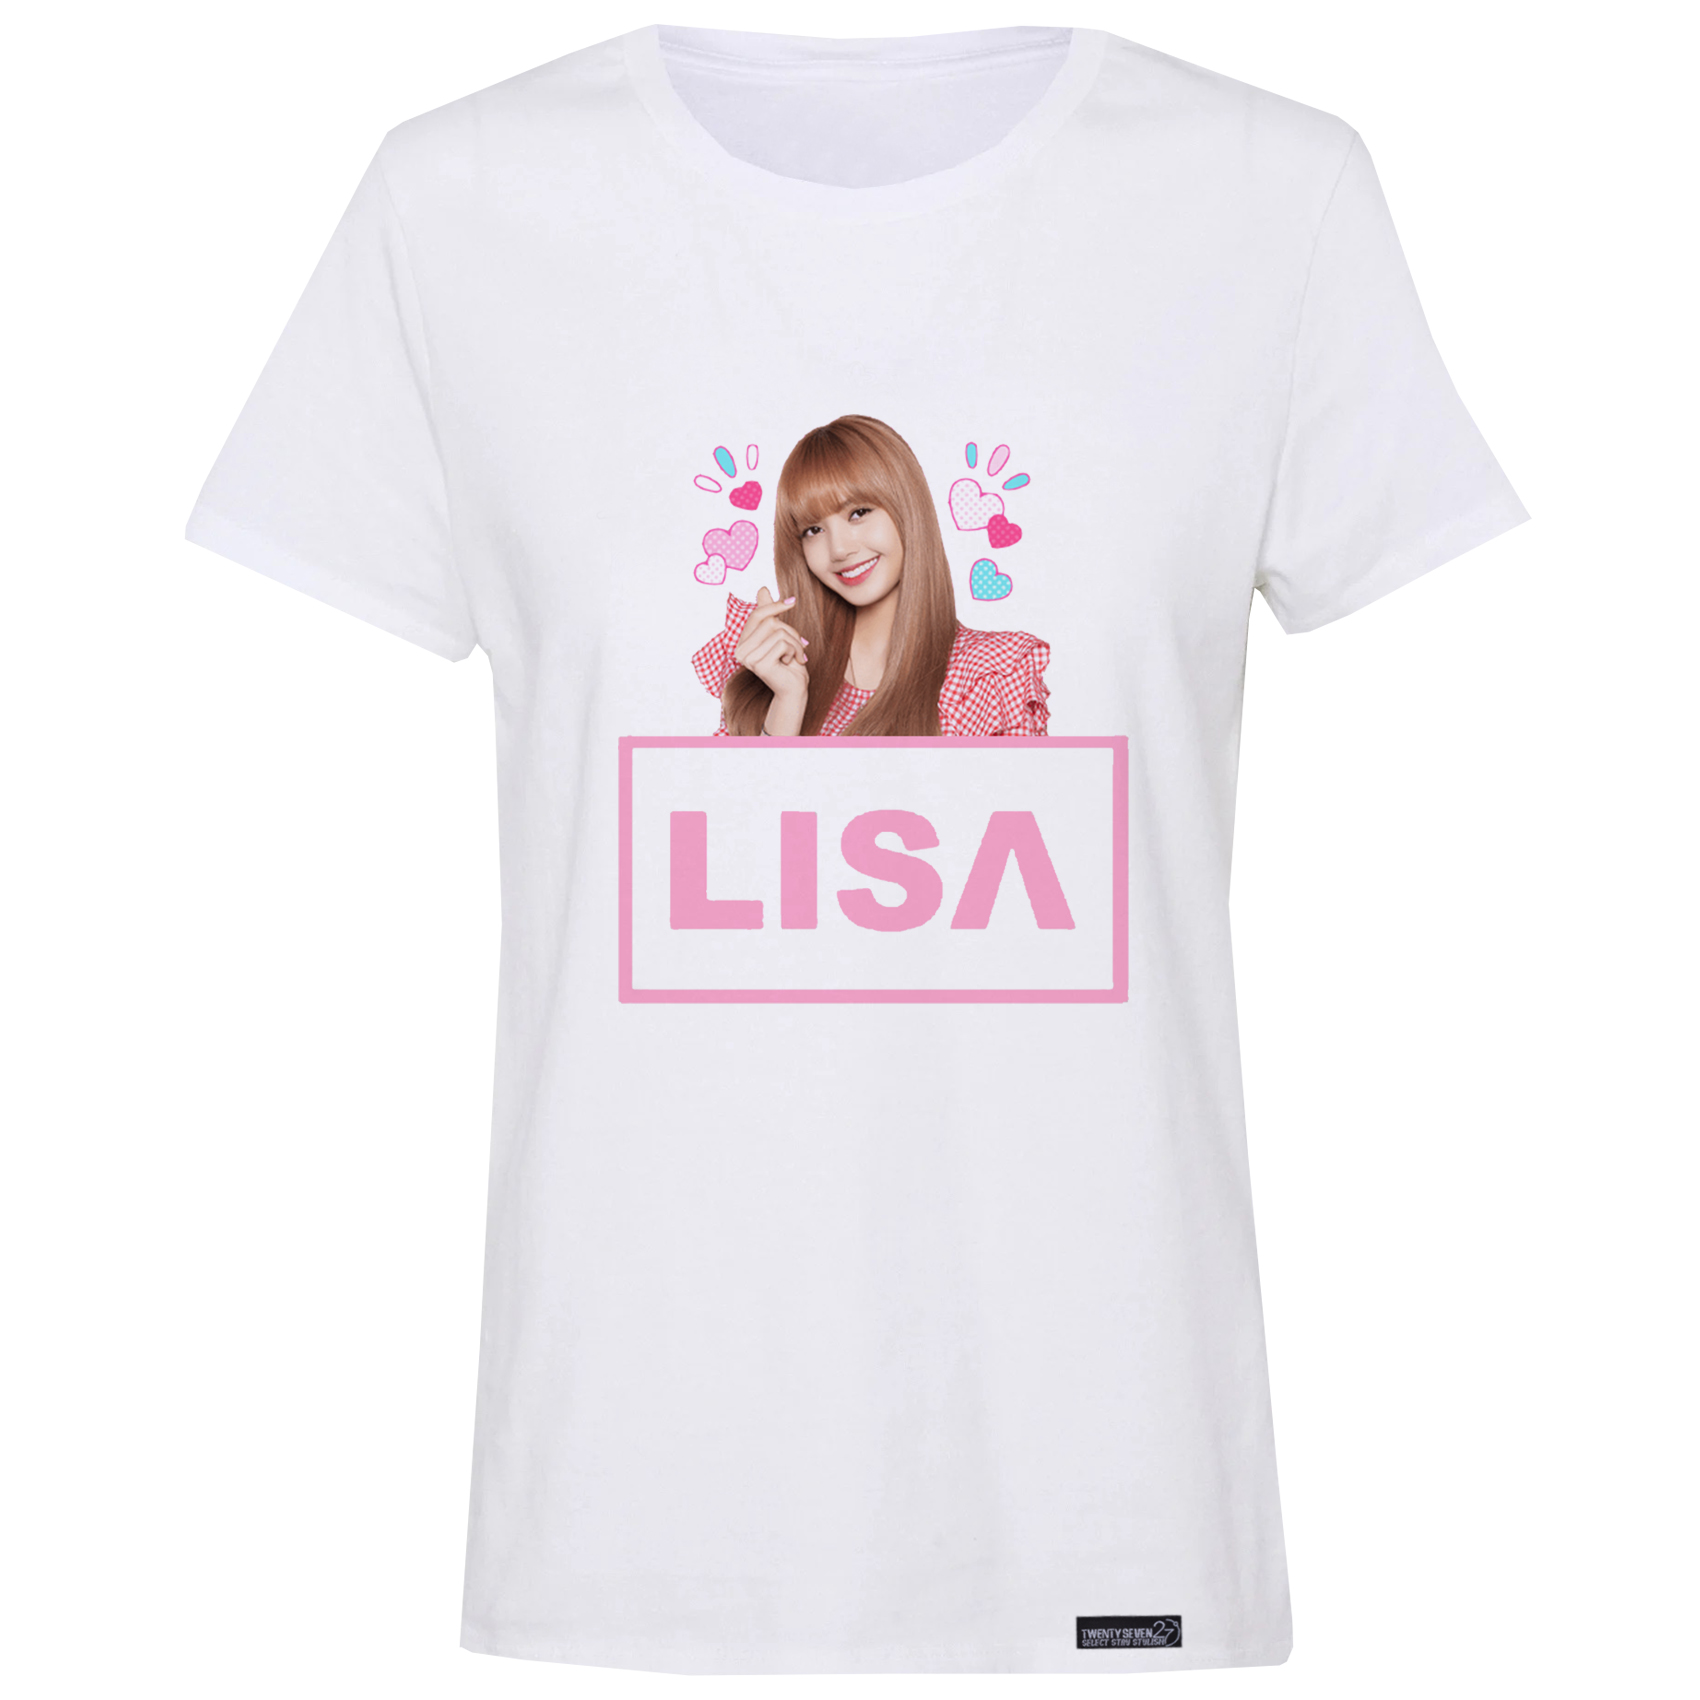 تی شرت آستین کوتاه زنانه 27 مدل لیسا بلک پینک کد WN583 -  - 2